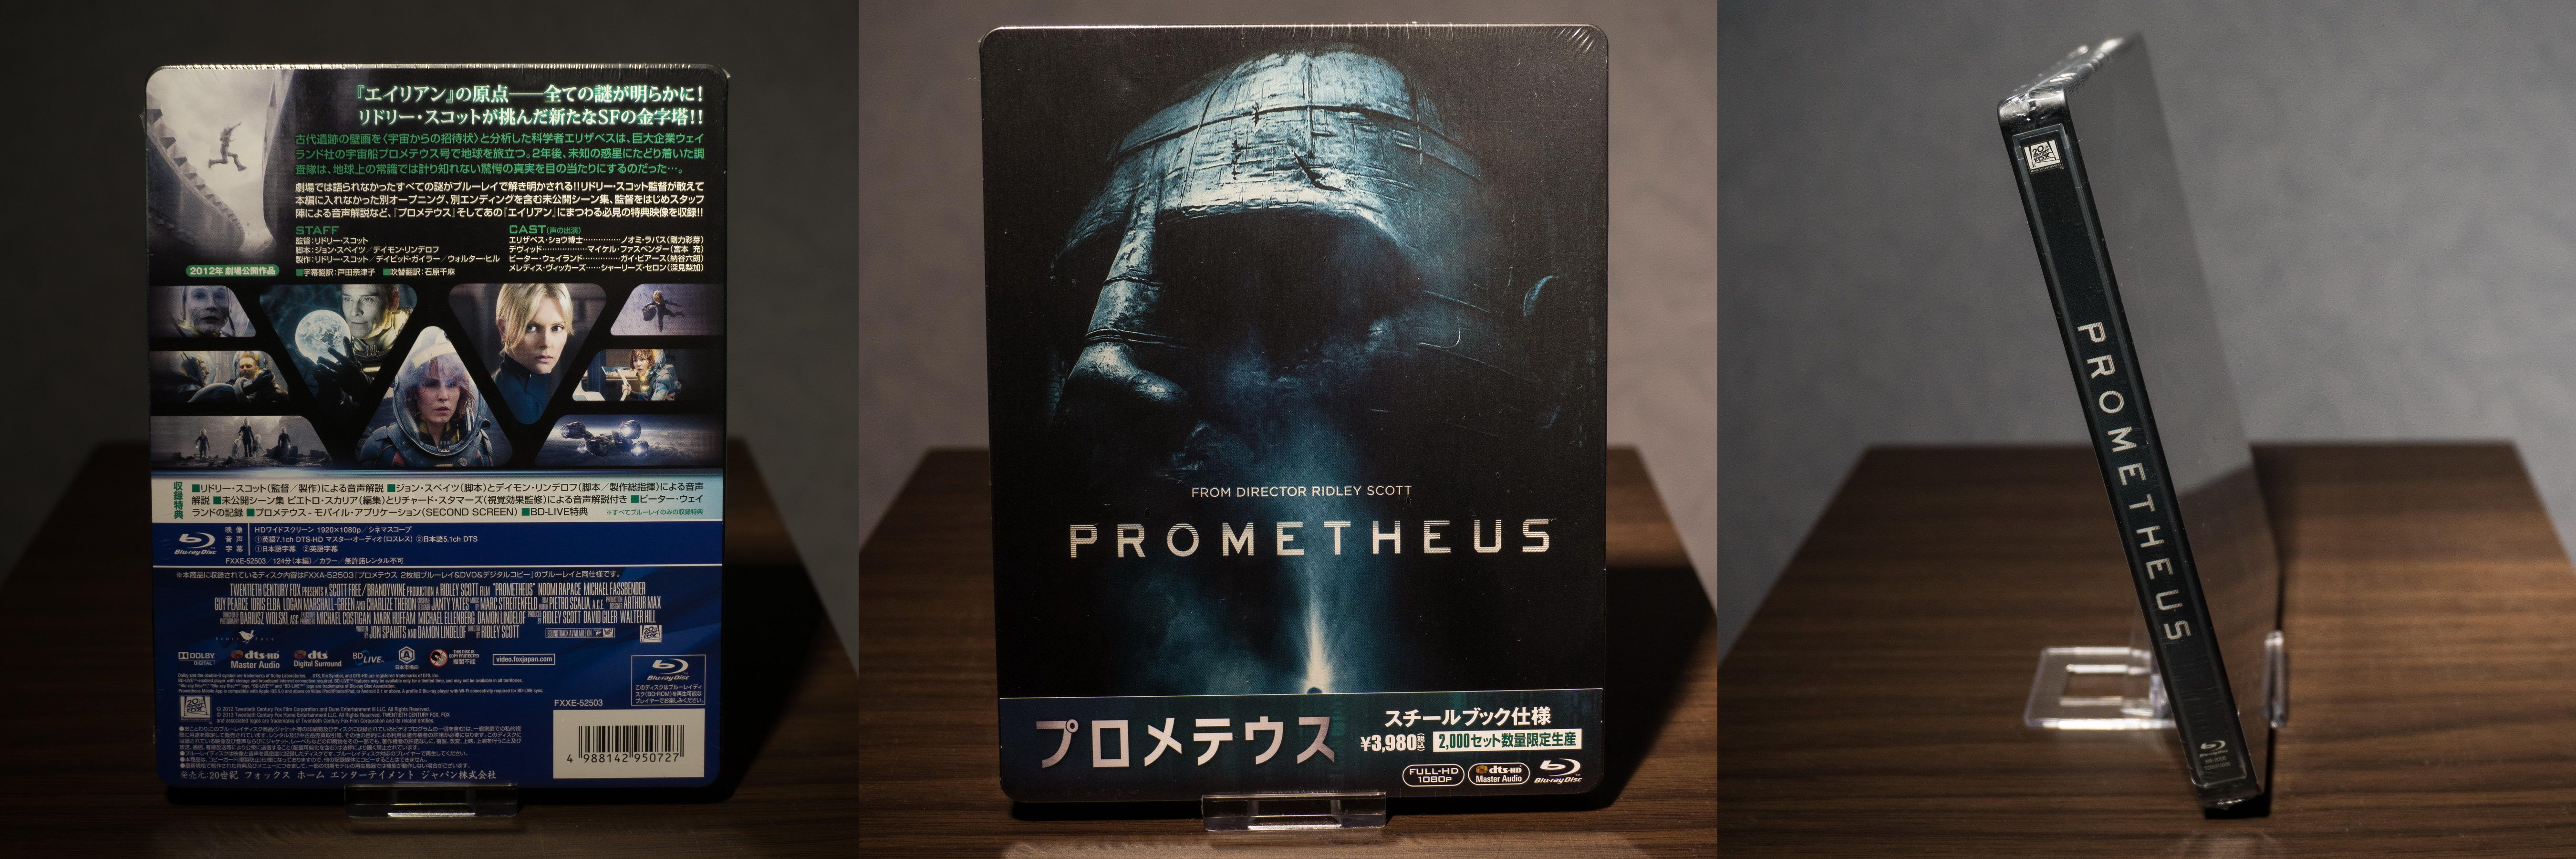 Prometheus Japan